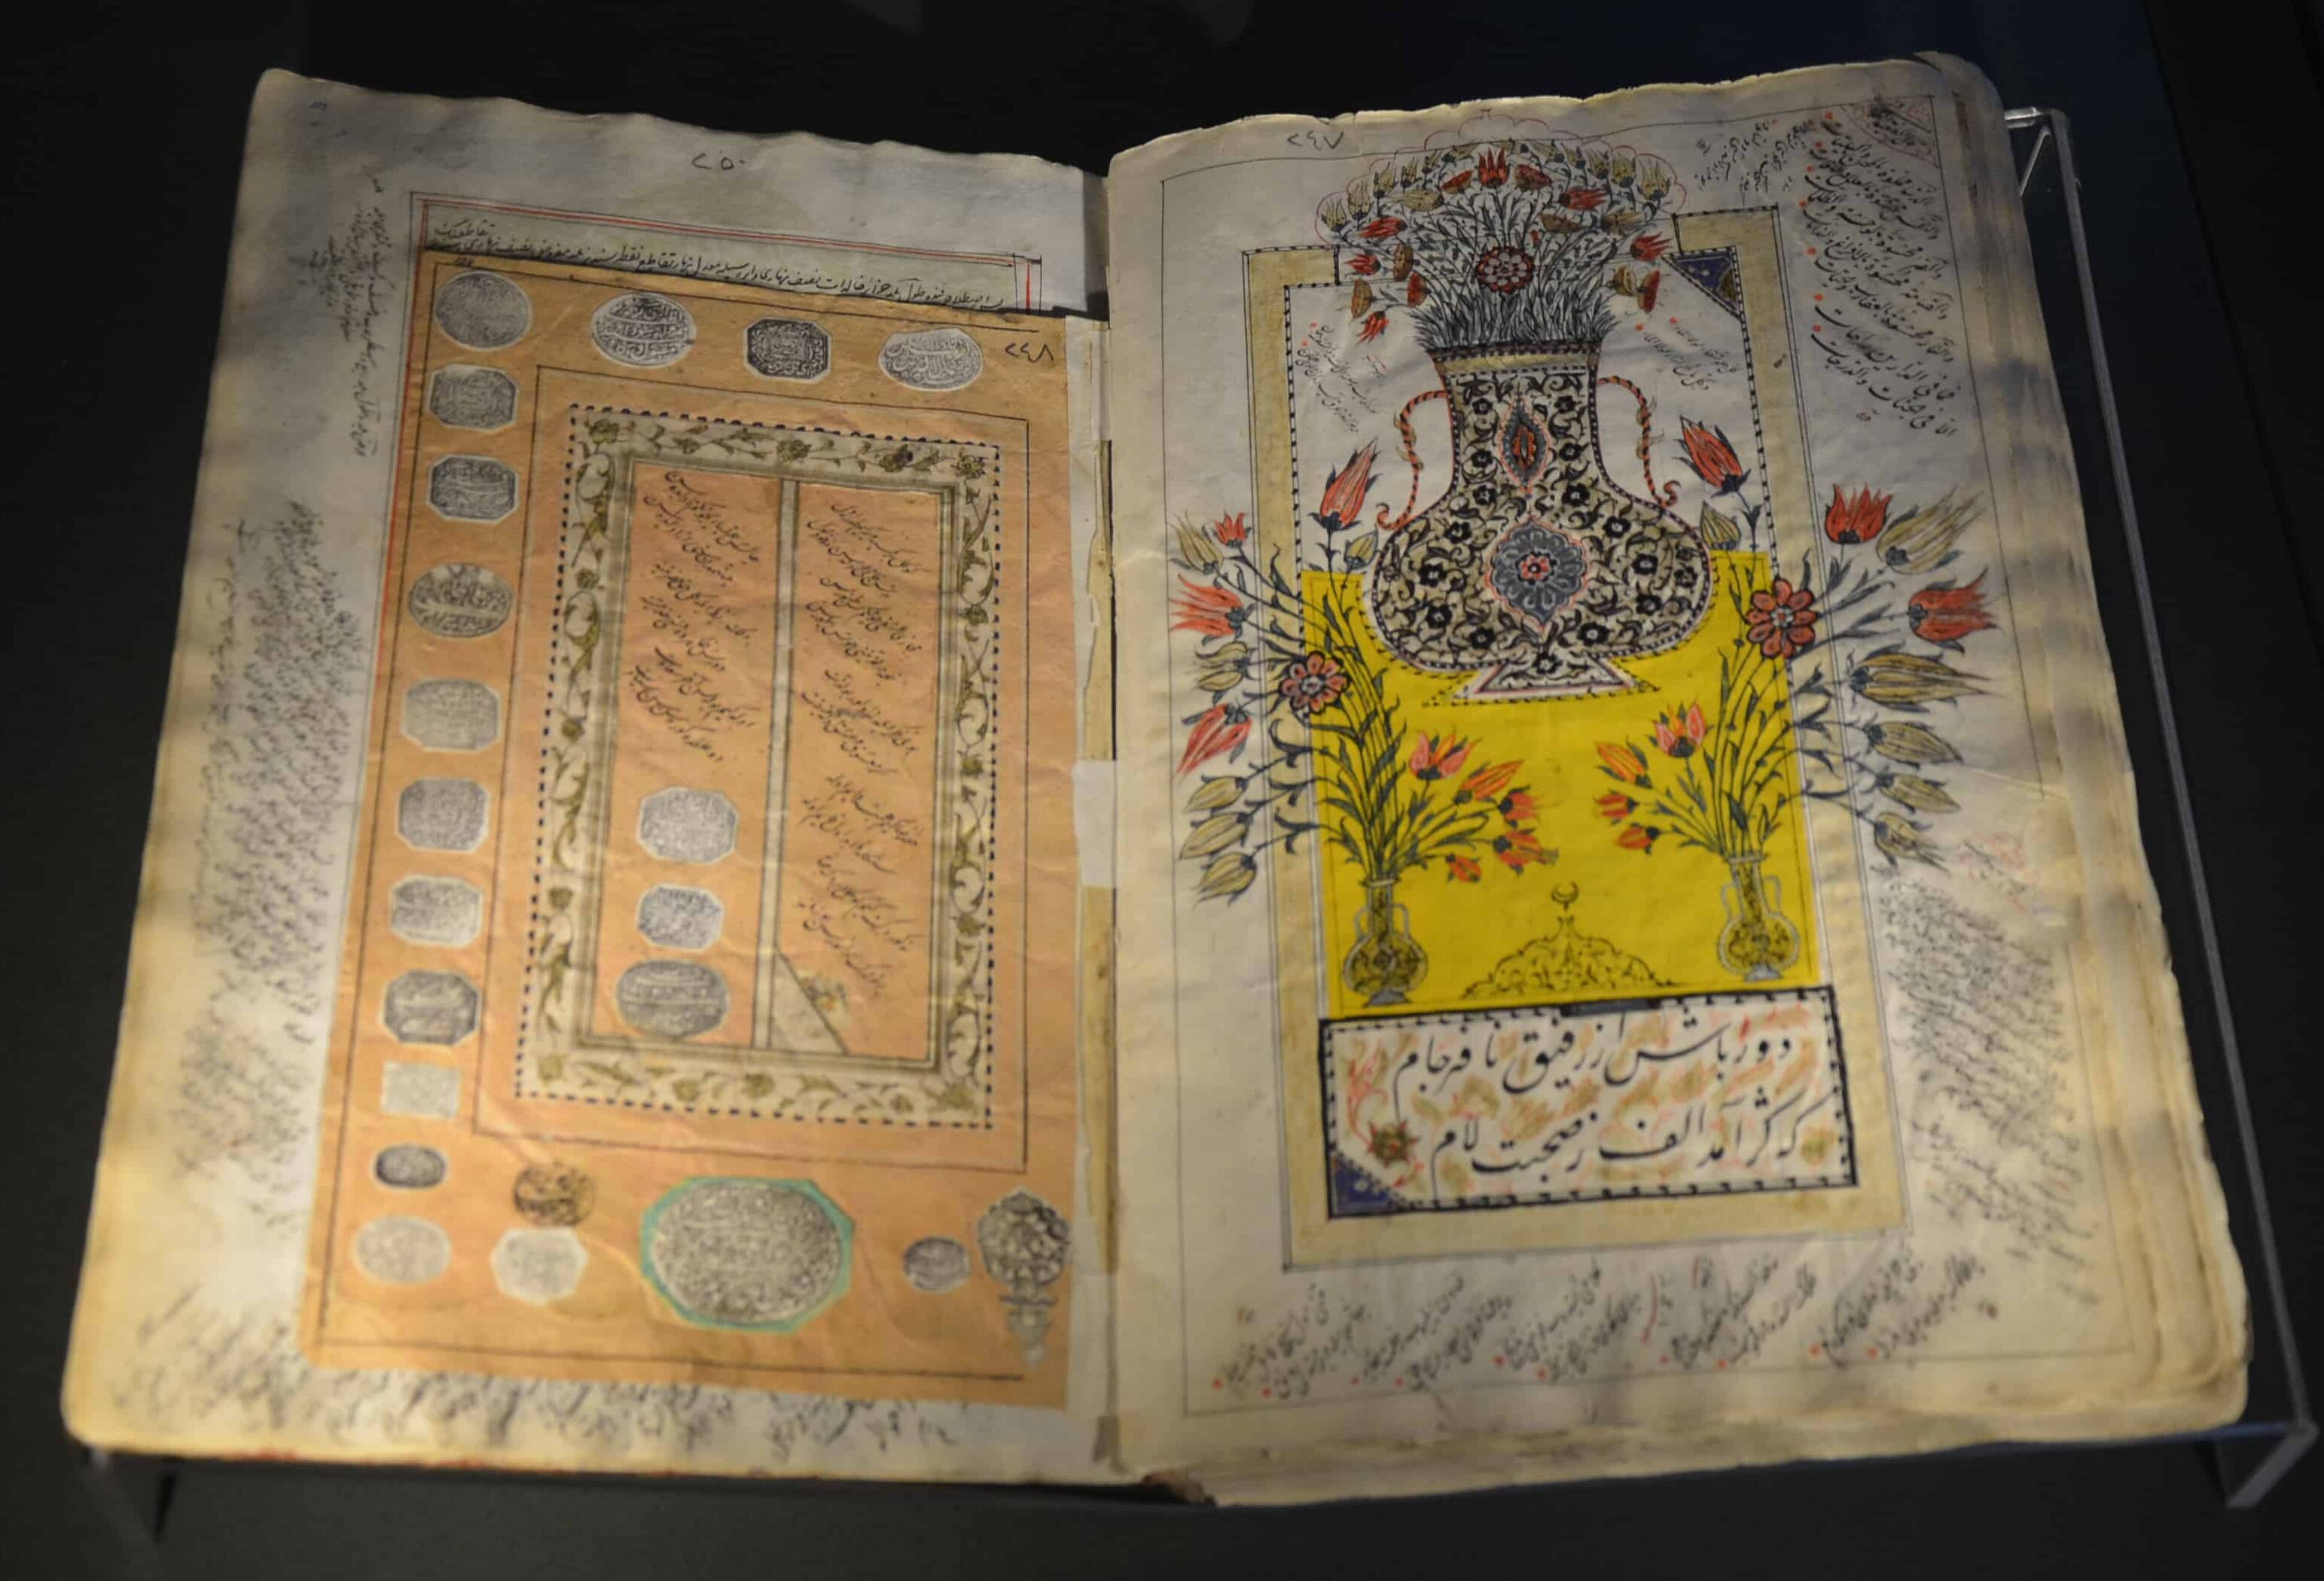 Book at the Mevlana Museum in Konya, Turkey